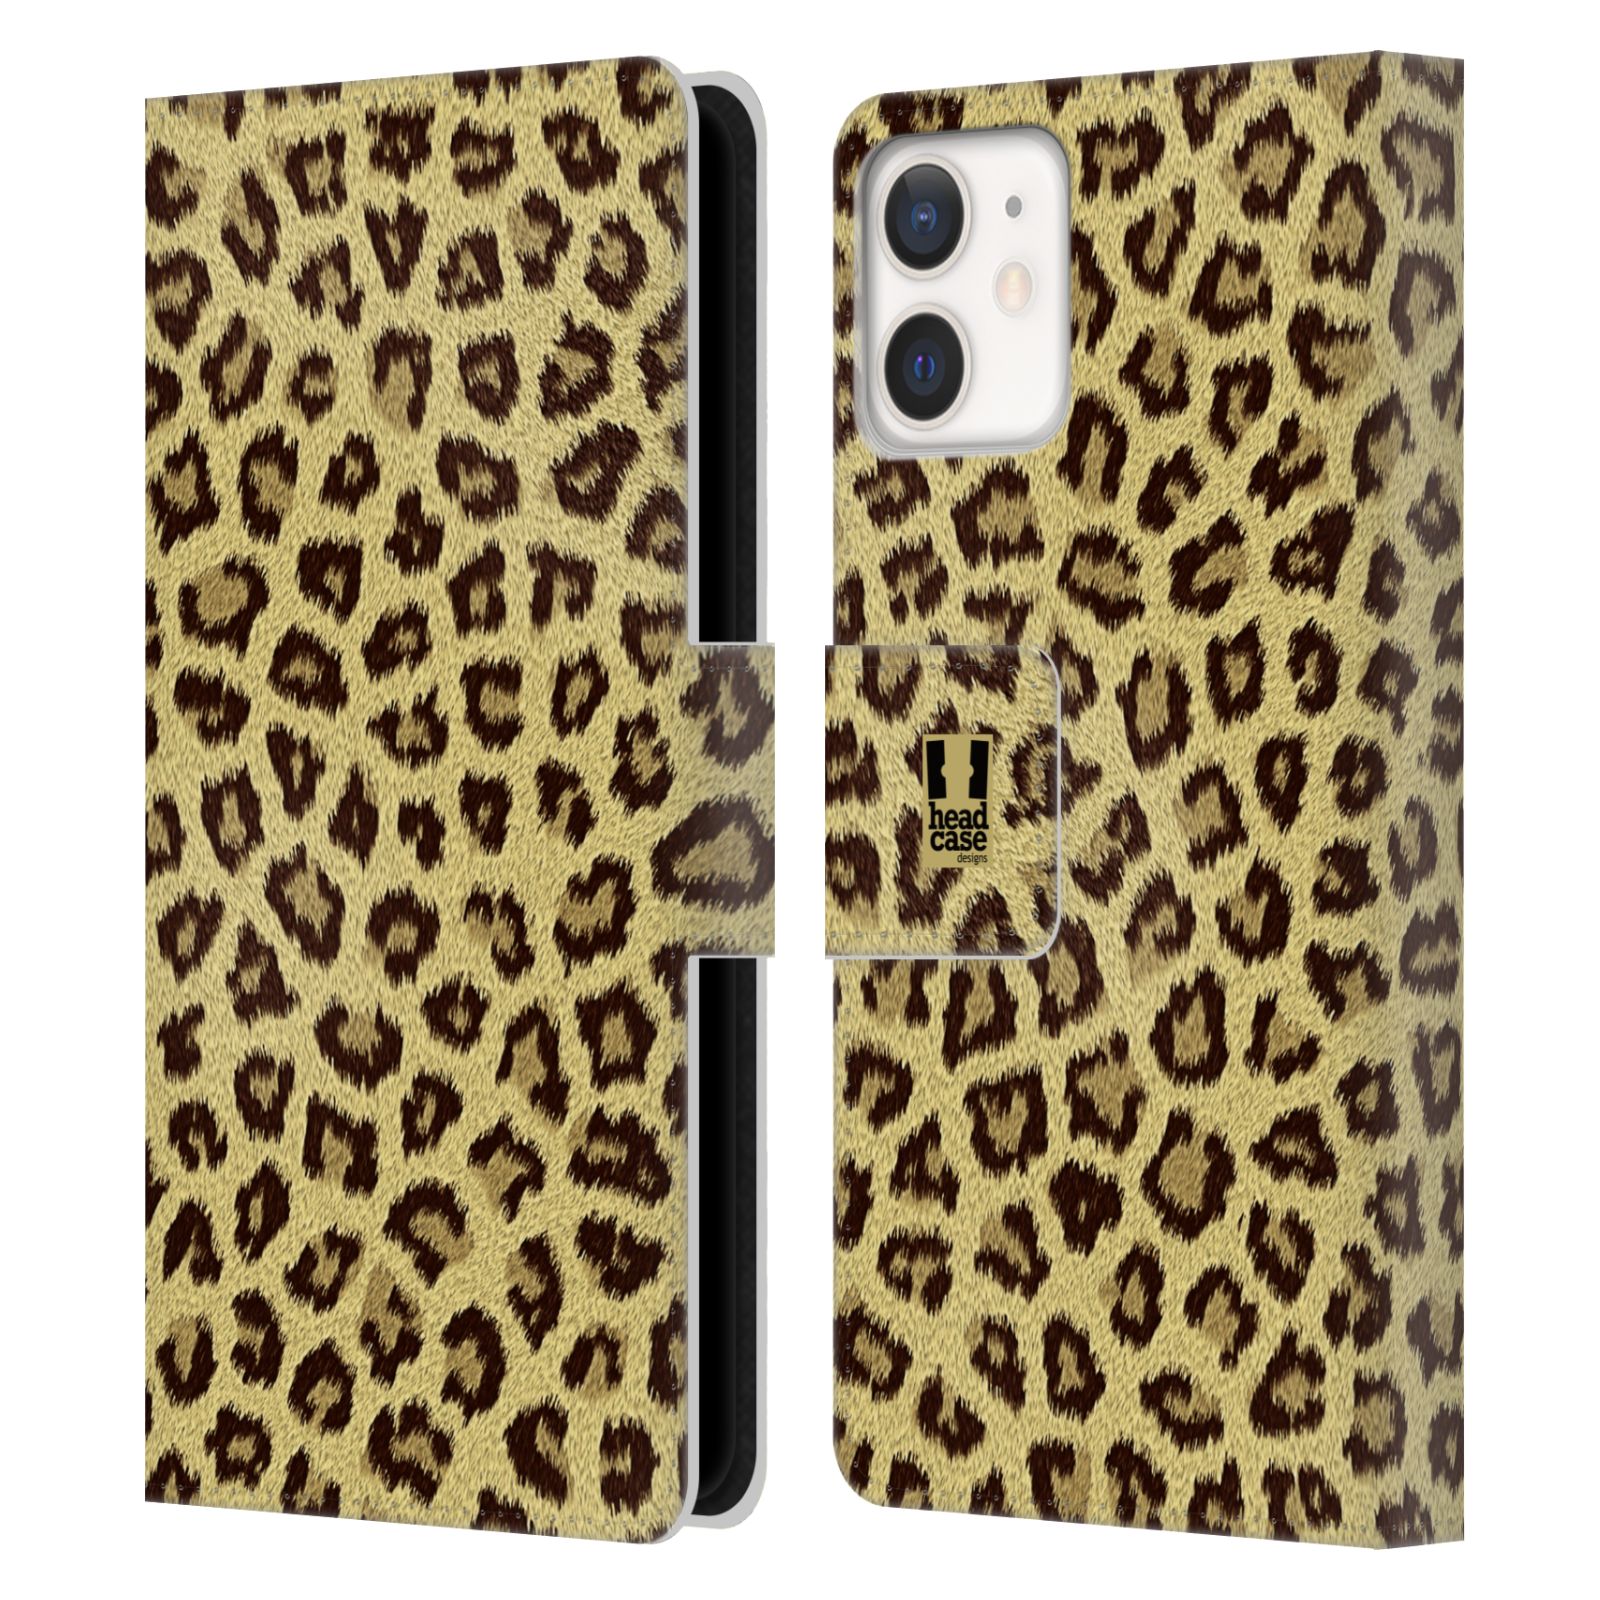 Pouzdro pro mobil Apple Iphone 12 MINI zvíře srst divoká kolekce jaguár, gepard